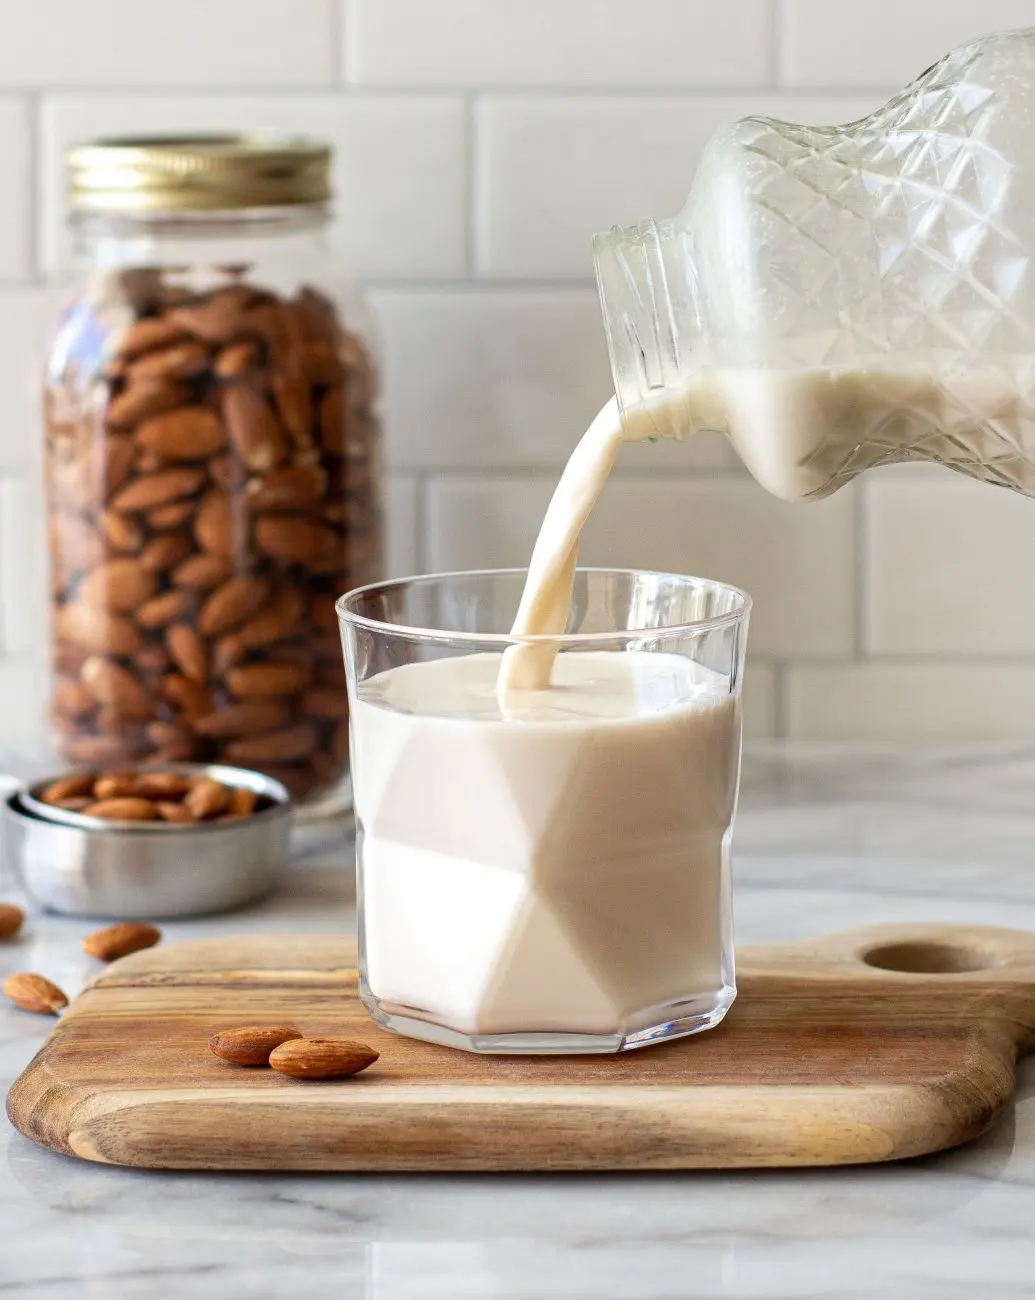 Almond milk contains less protein